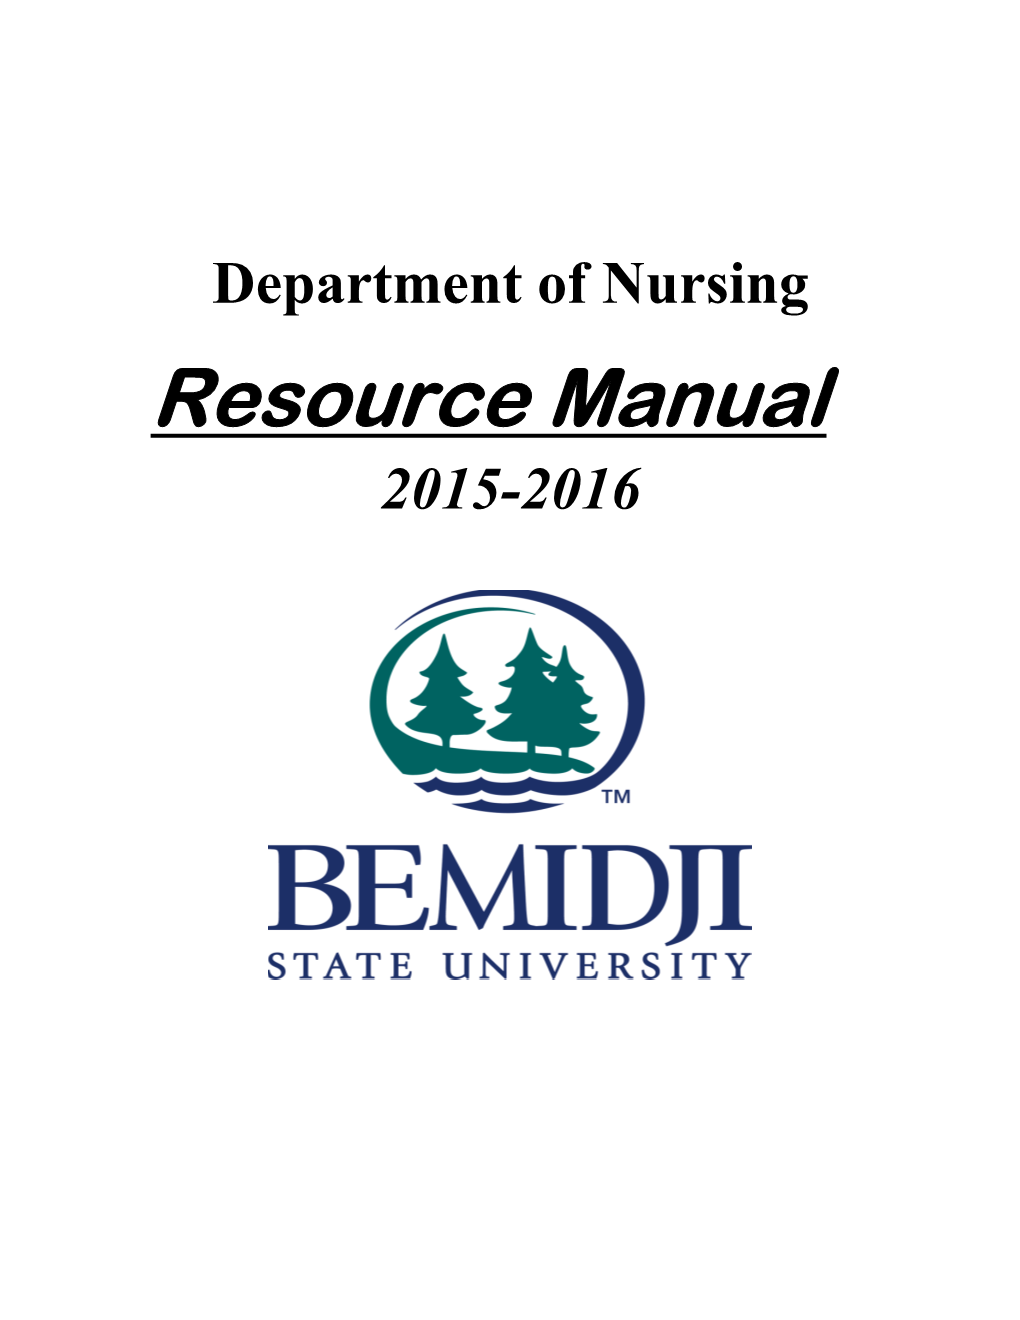 Department of Nursing Resource Manual 2015-2016